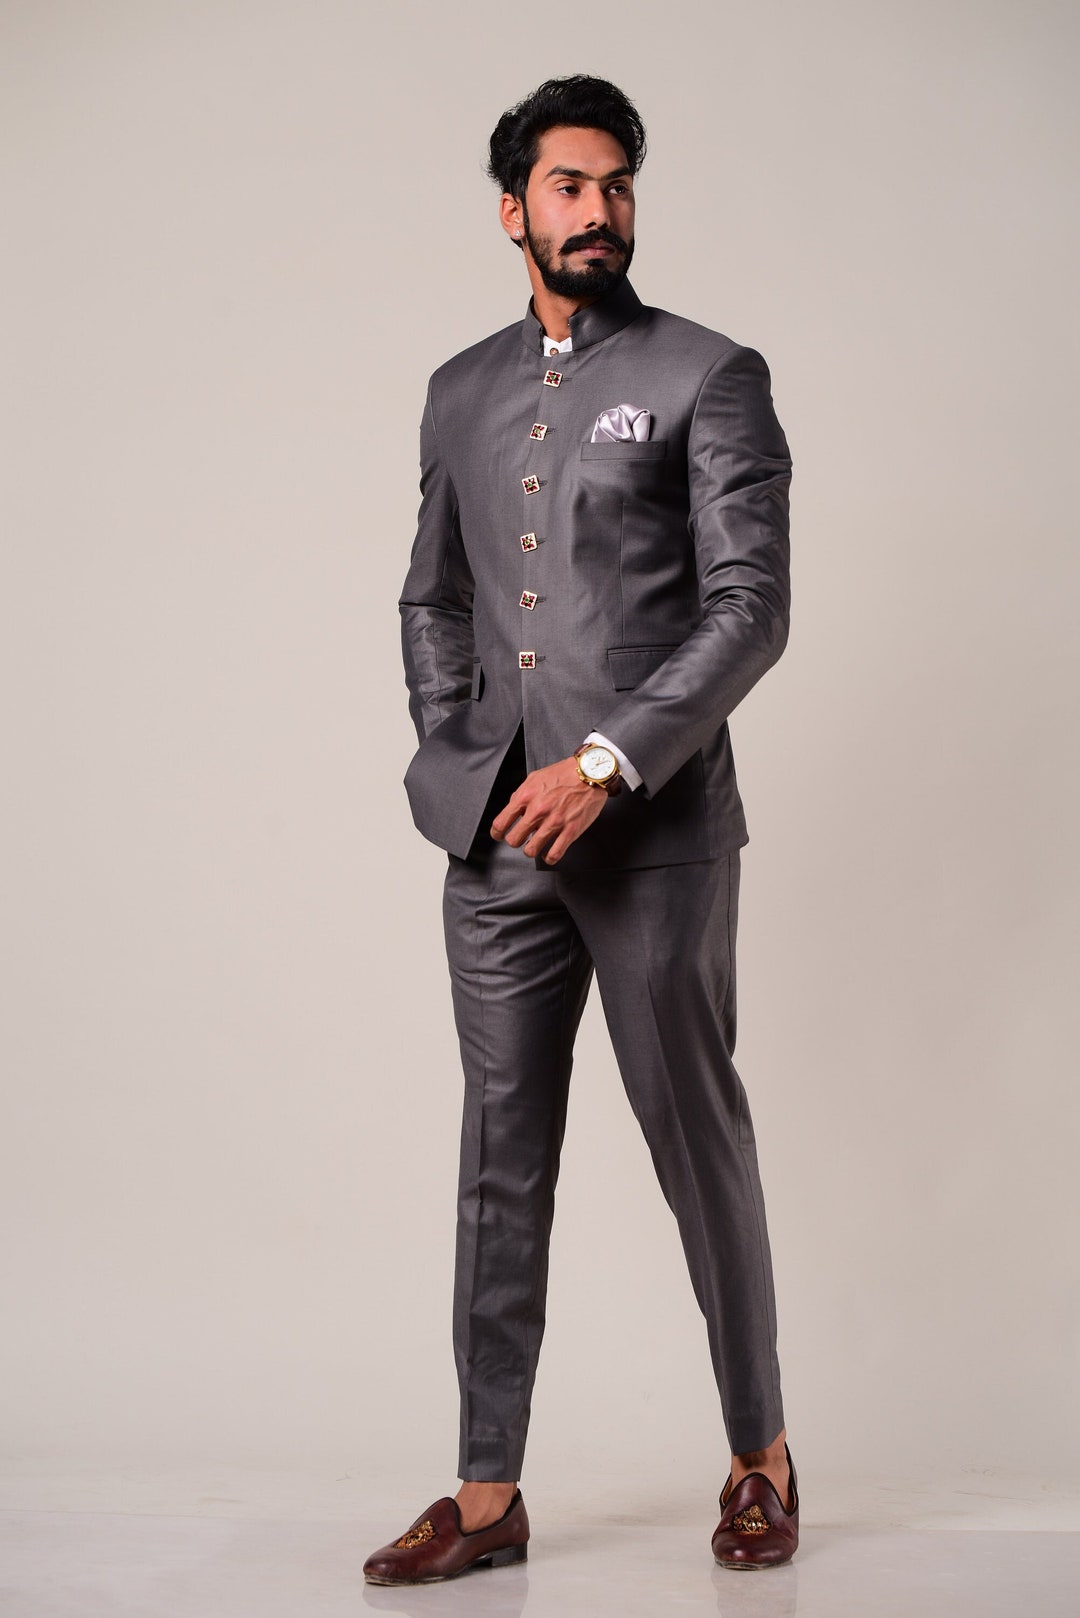 Mens Designer Jodhpuri Suit,Party Wear Jodhpuri Suit,Mens Jodhpuri Suit,Wedding  Jodhpuri Suit,Indian Designer Jodhpuri Suit,Jodhpuri Suit For Mens,Mens  Suits or Wedding